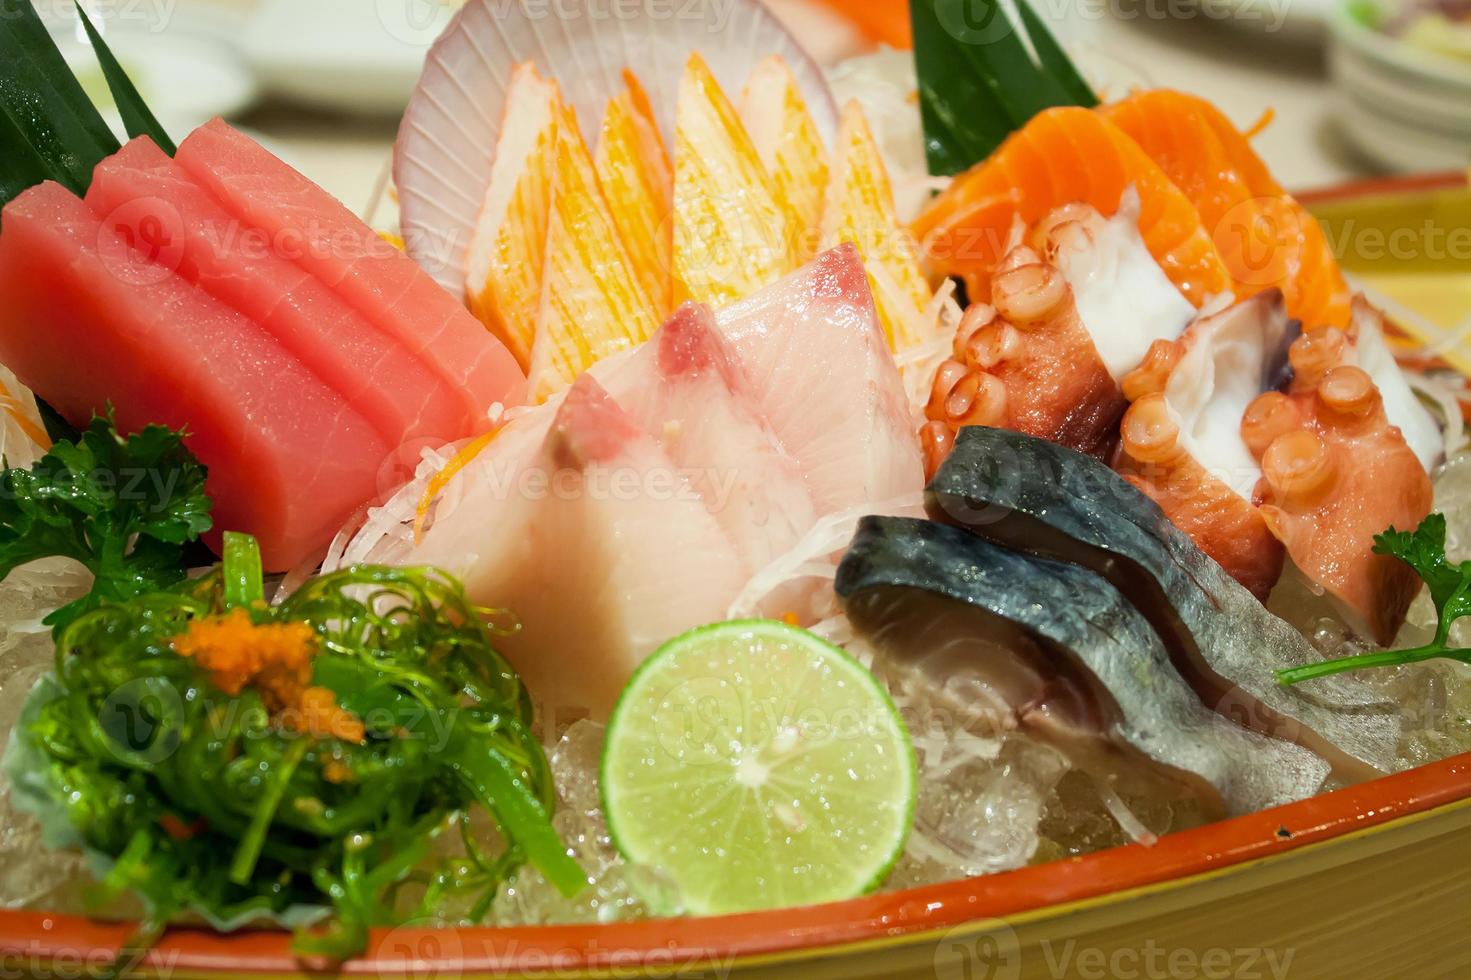 set di sashimi cibo giapponese foto